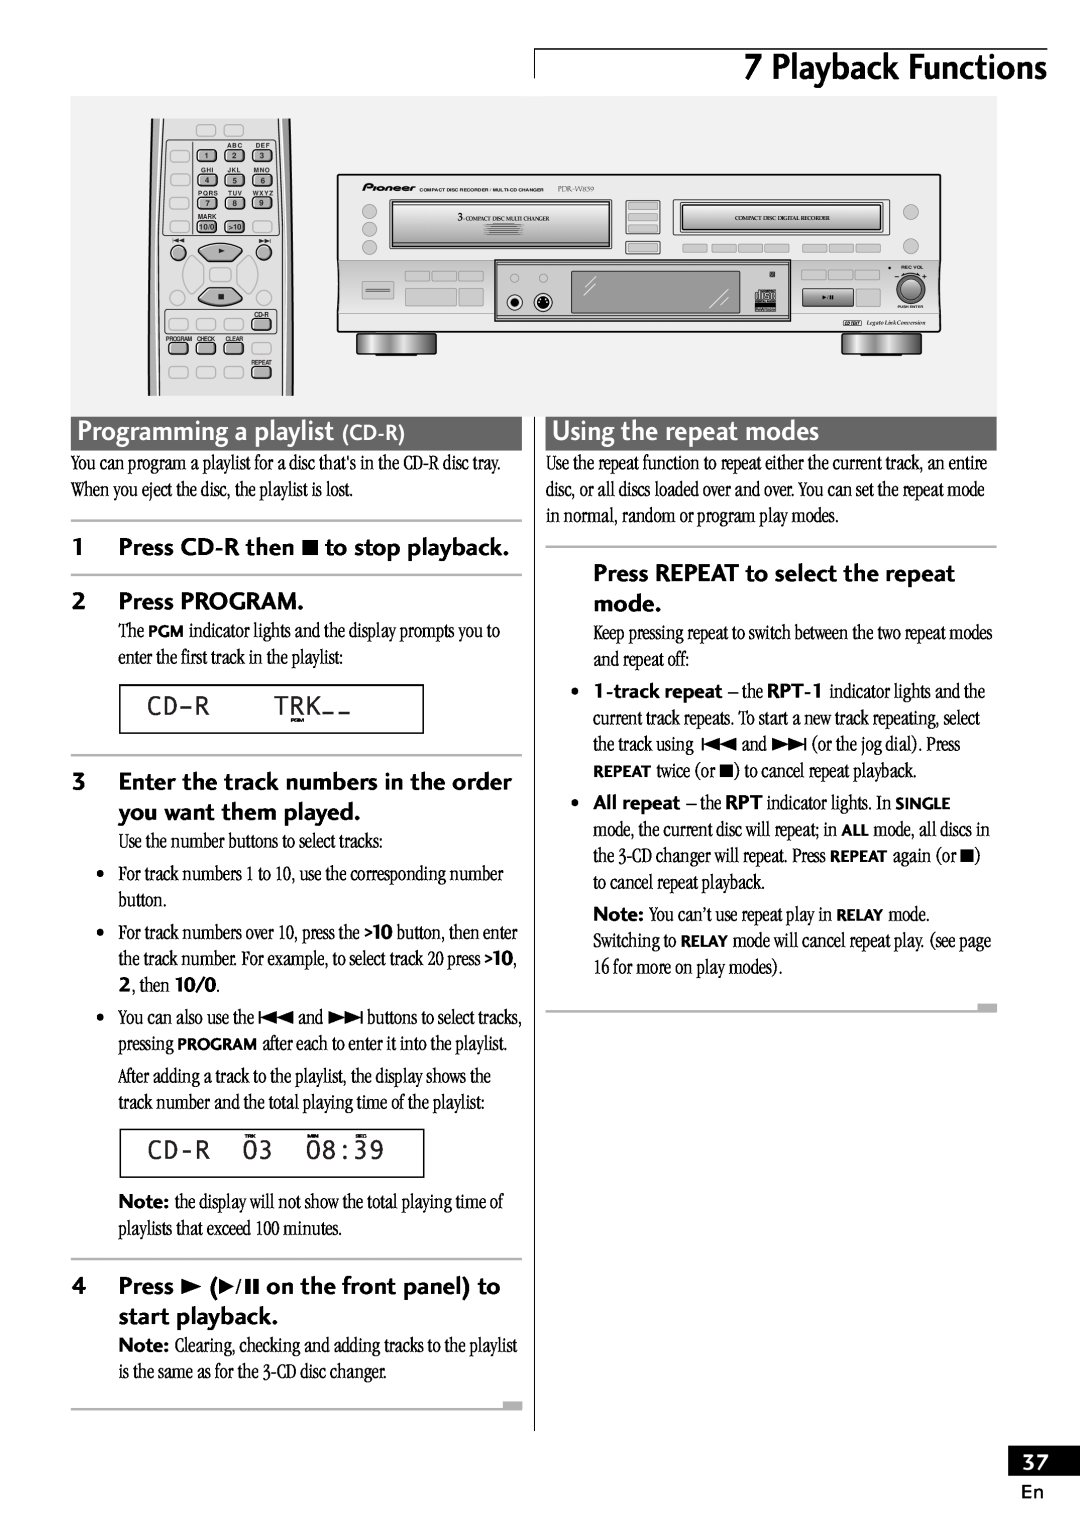 Pioneer PDR-W839 manual Playback Functions, Programming a playlist CD-R, Using the repeat modes, Cdðr Trkpgm Ðð, CD-RO3, O8 